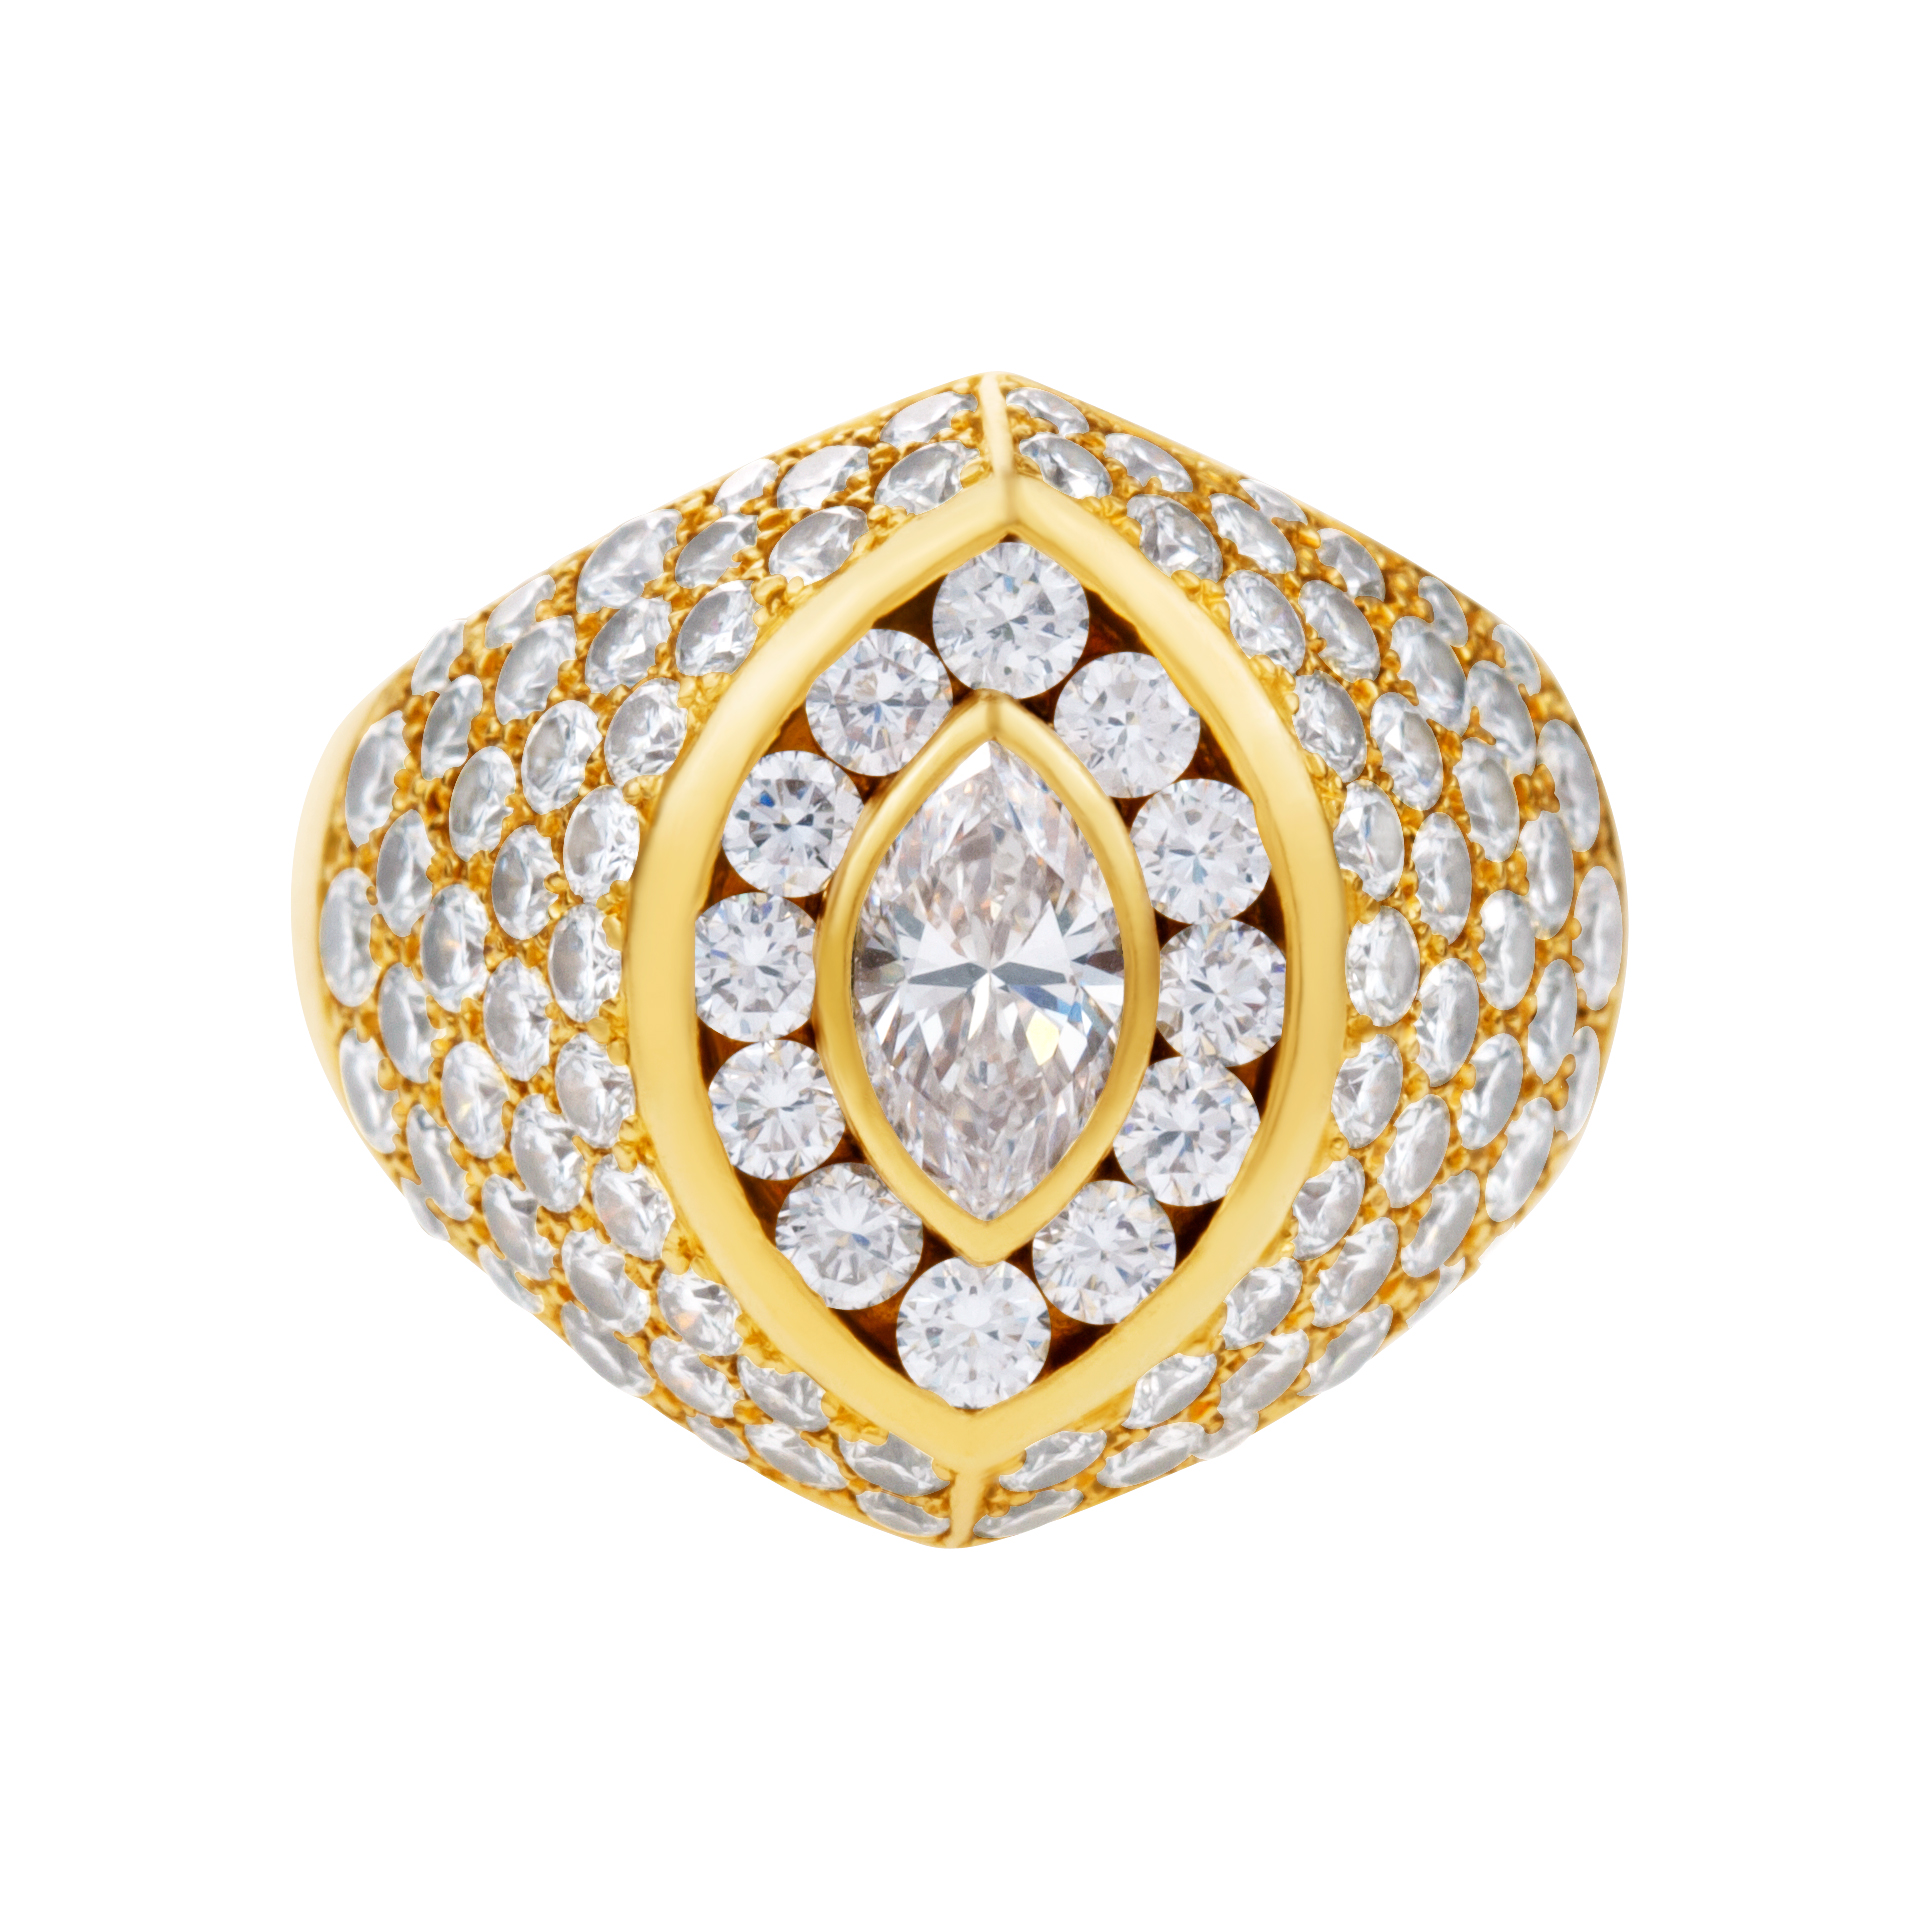 Kutchinsky 18K yellow gold diamond ring, total diamonds weight approx. 4.00 carats. All diamonds estimate E-F color, VVS clarity. image 2